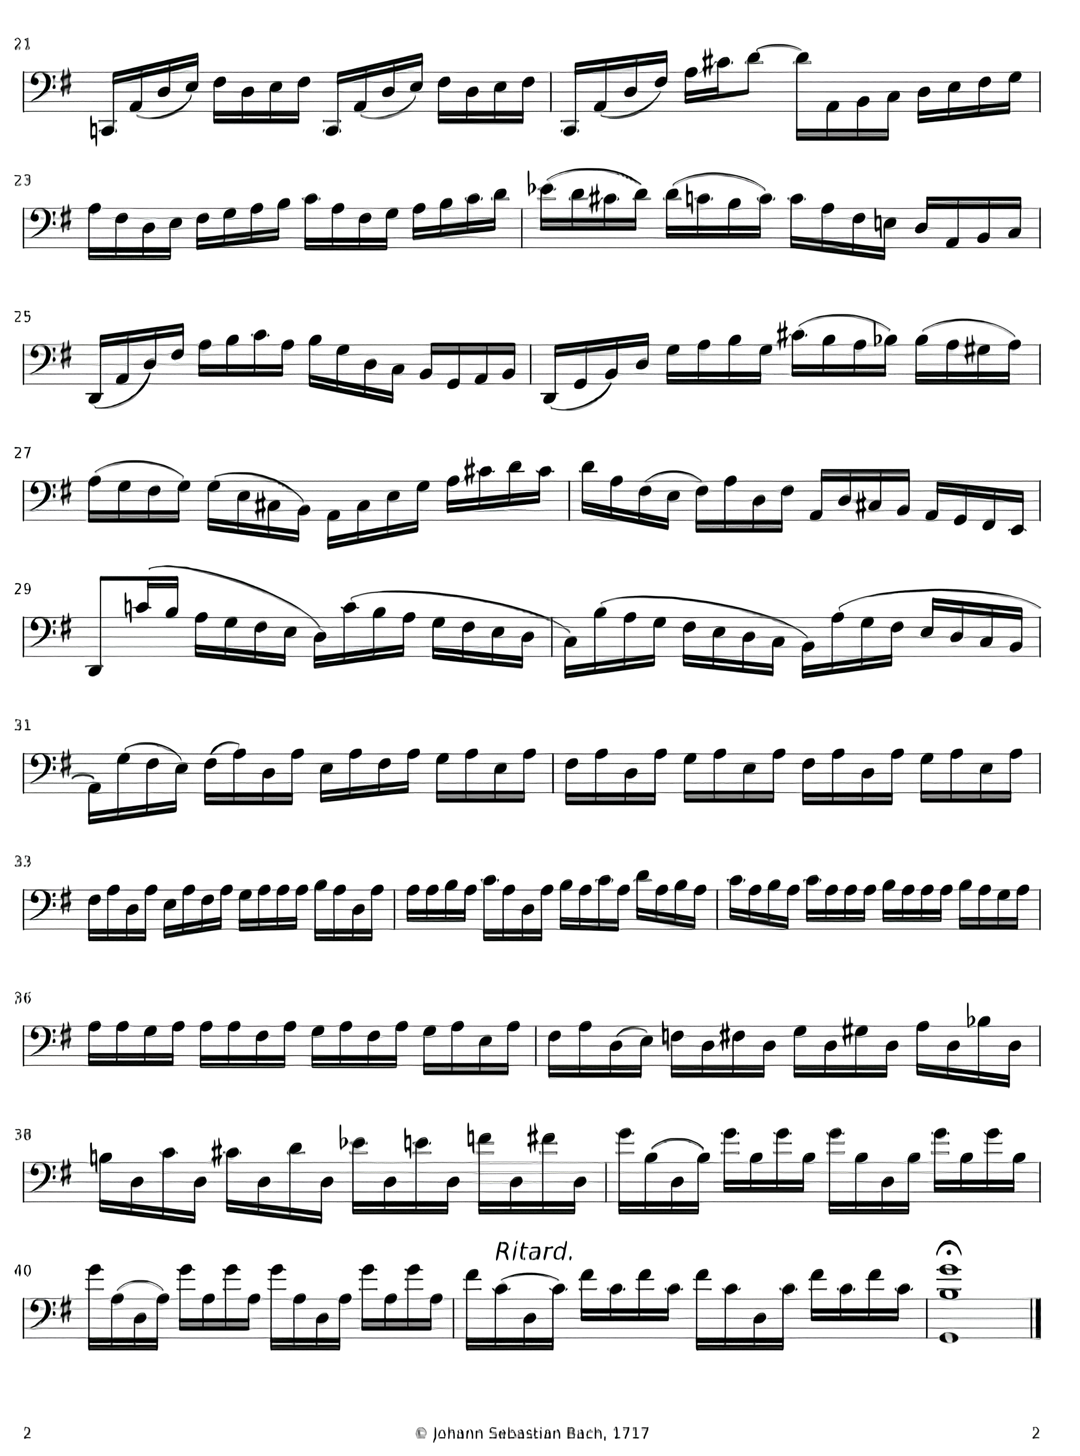 J.S. Bach "Suite for Violoncello Nr.1 ноты для бас гитары